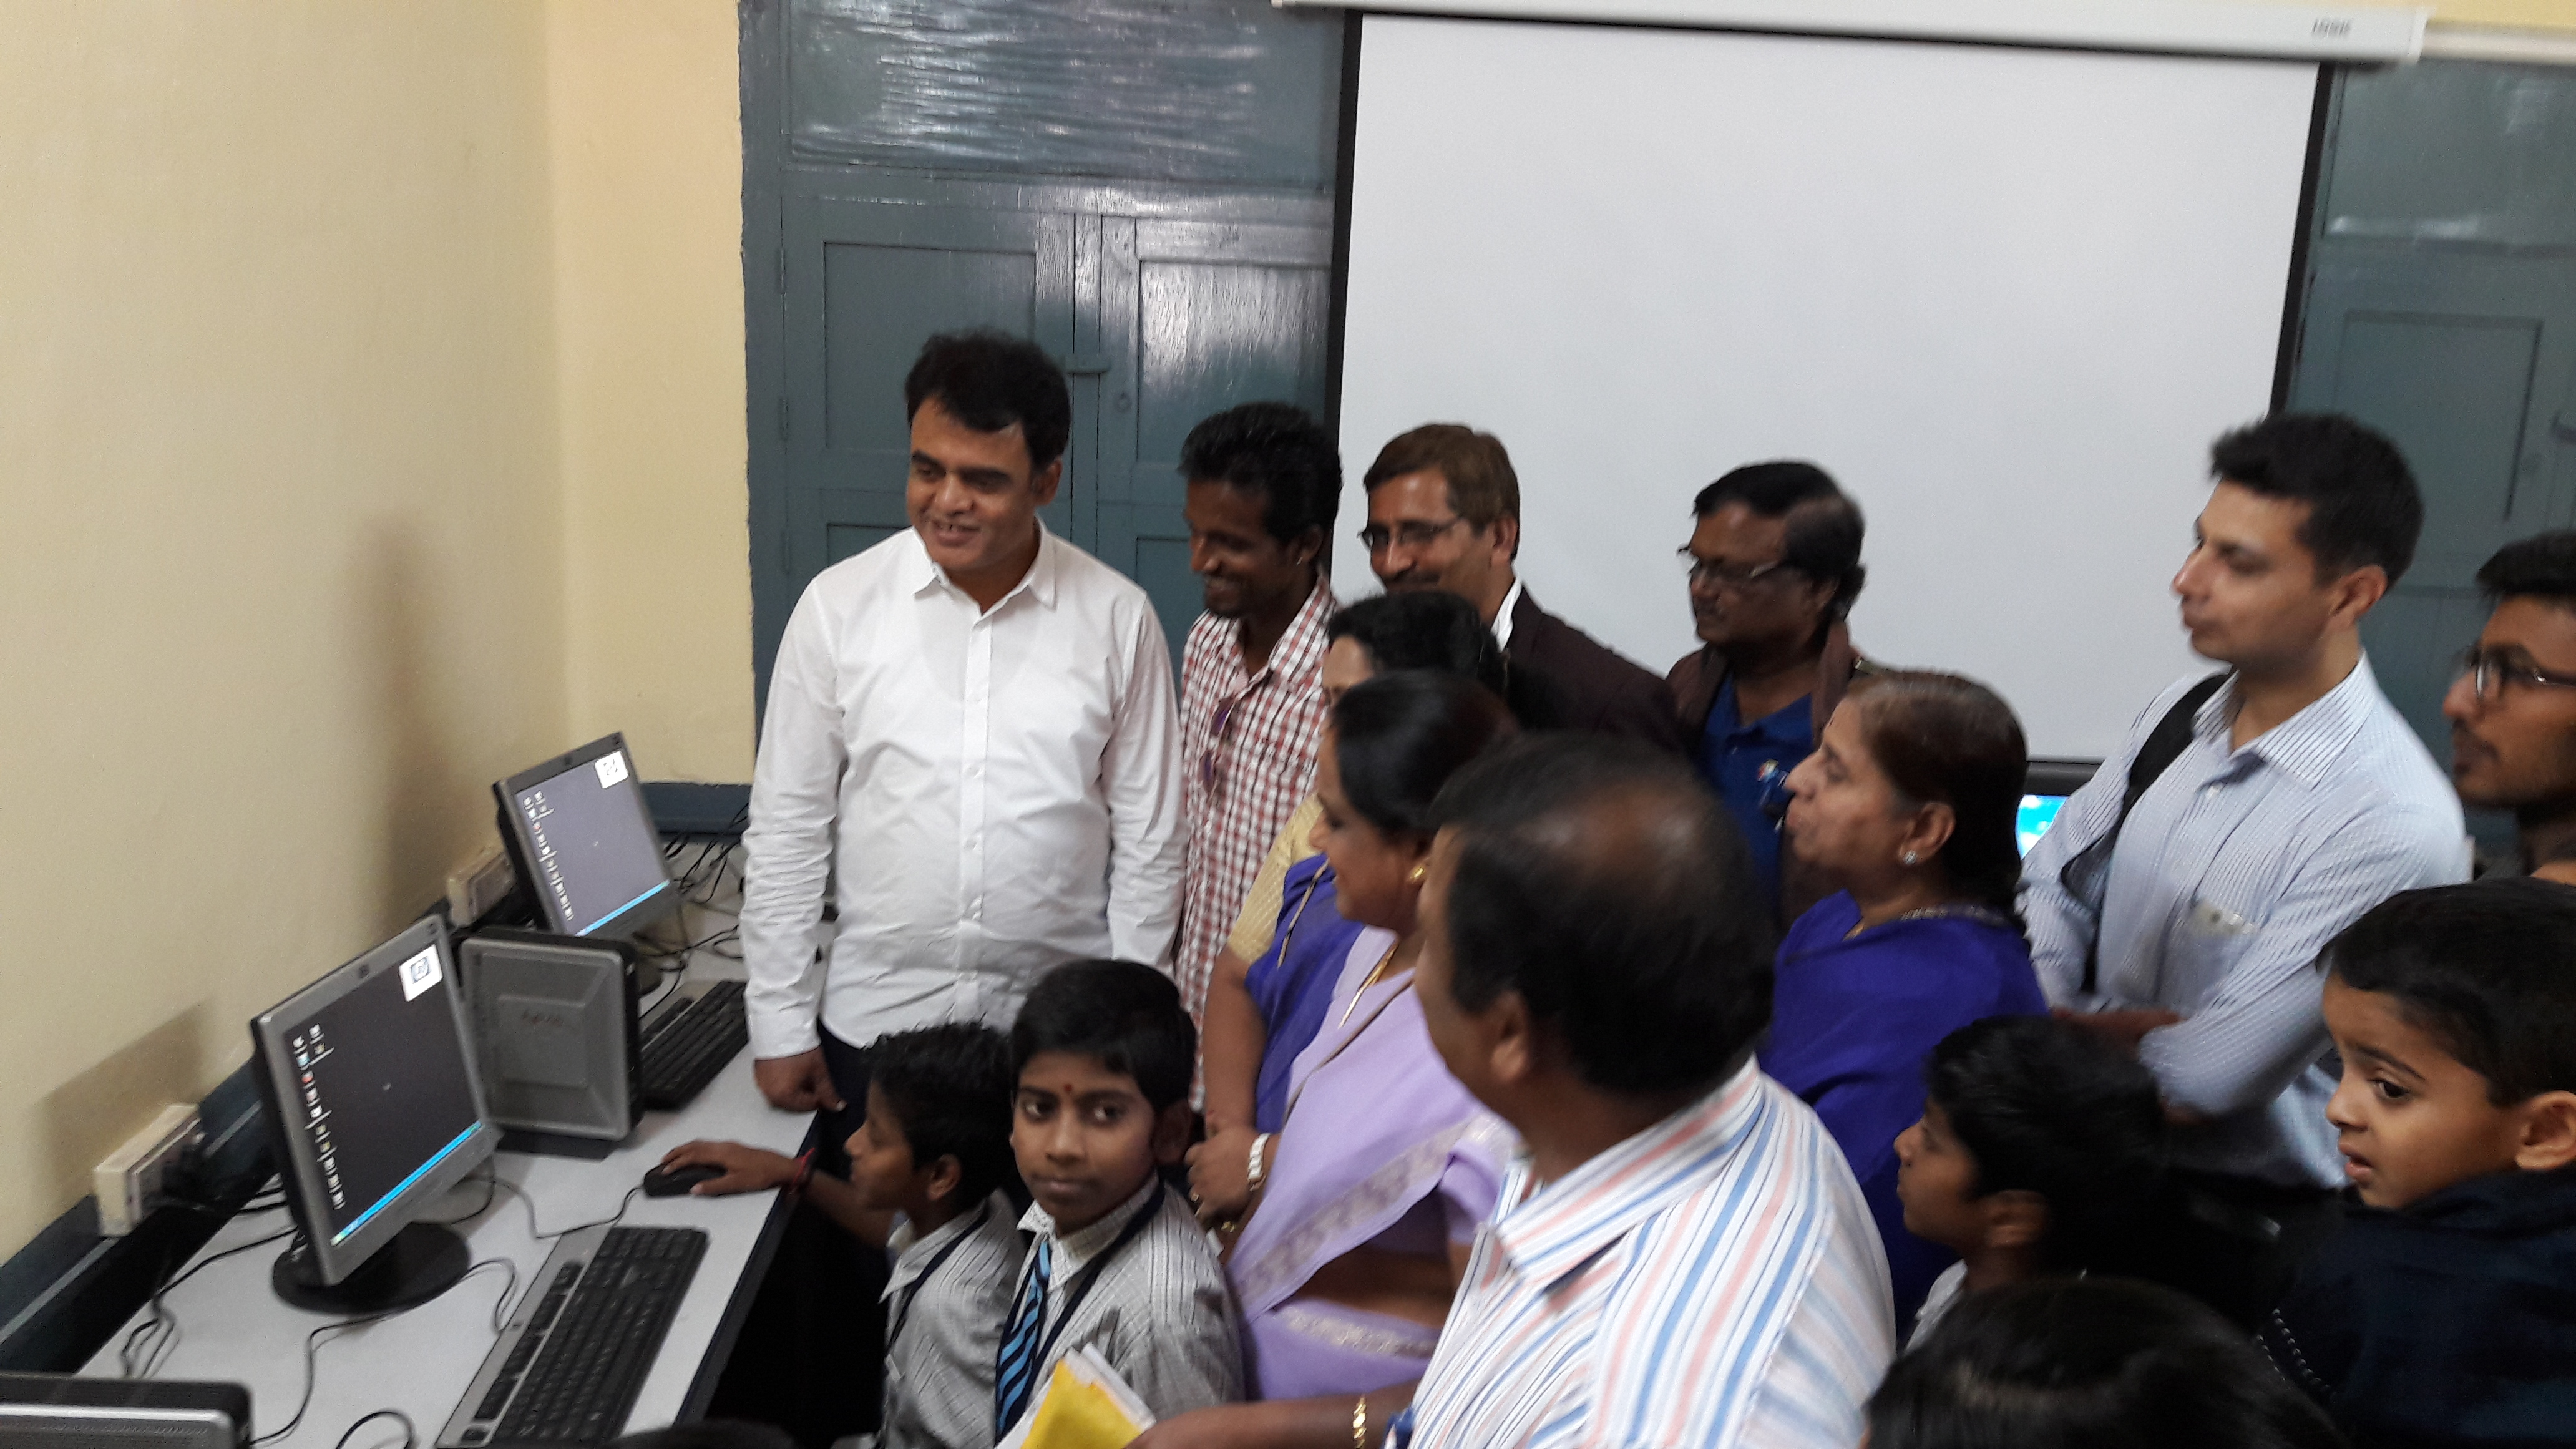 Inauguration of Computer lab at Govt Primary School, Palace Guttahalli - Bangalore